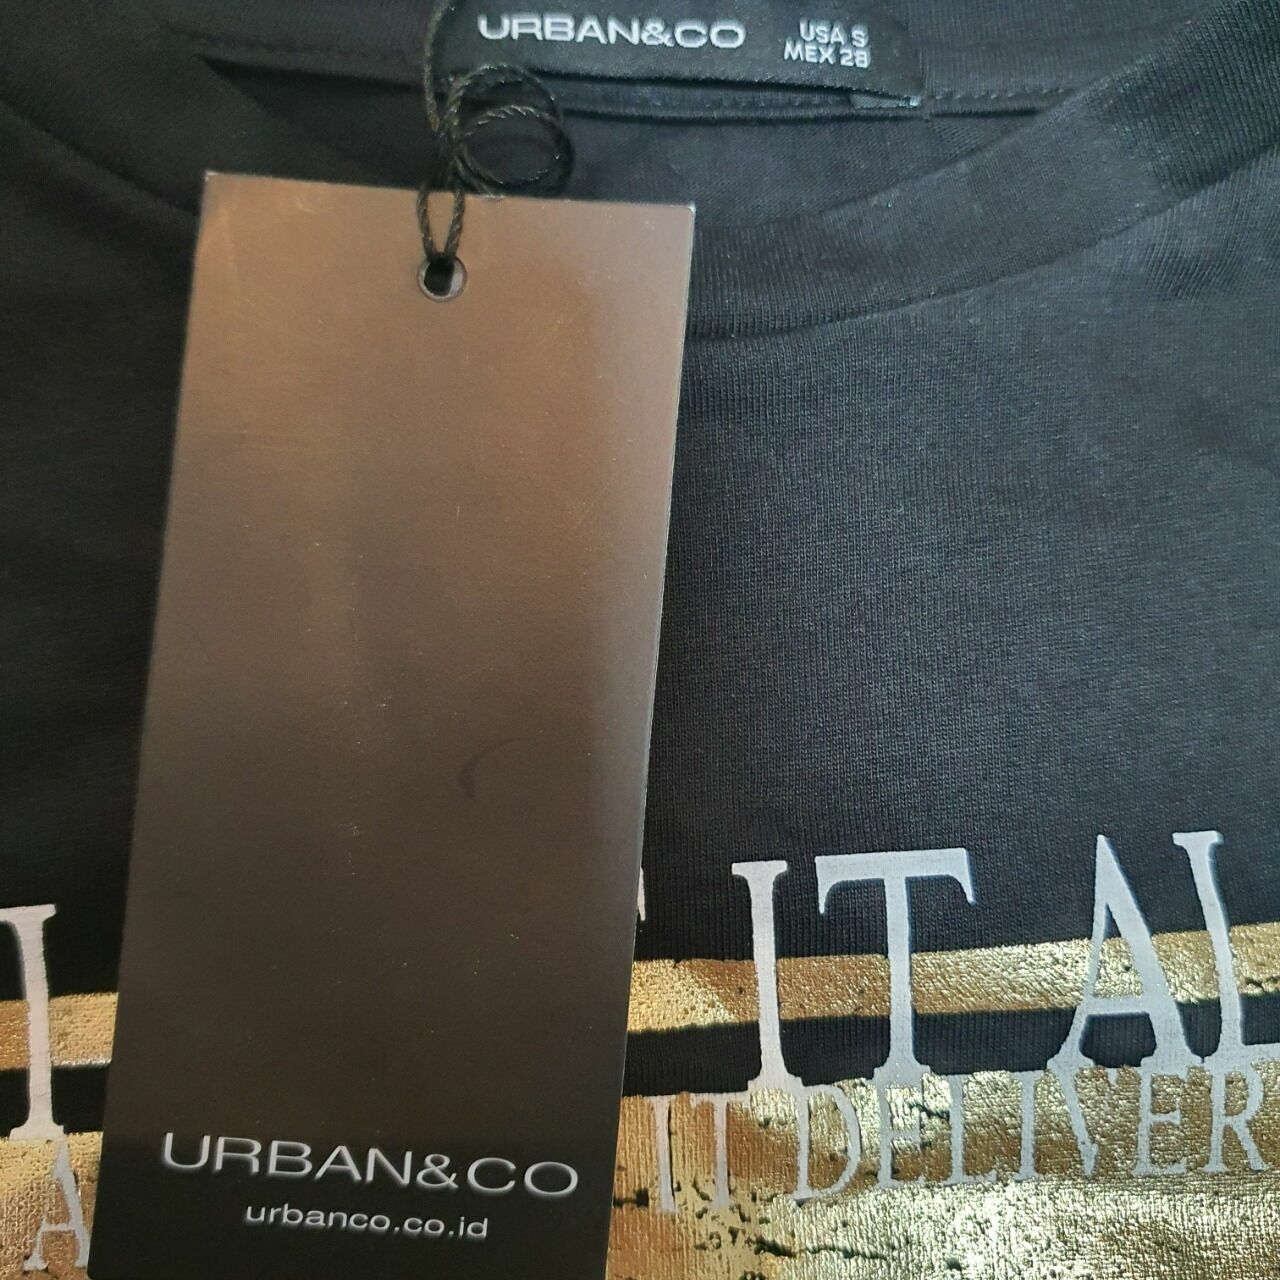 Urban & Co Gold Foil Printed Black Tshirt